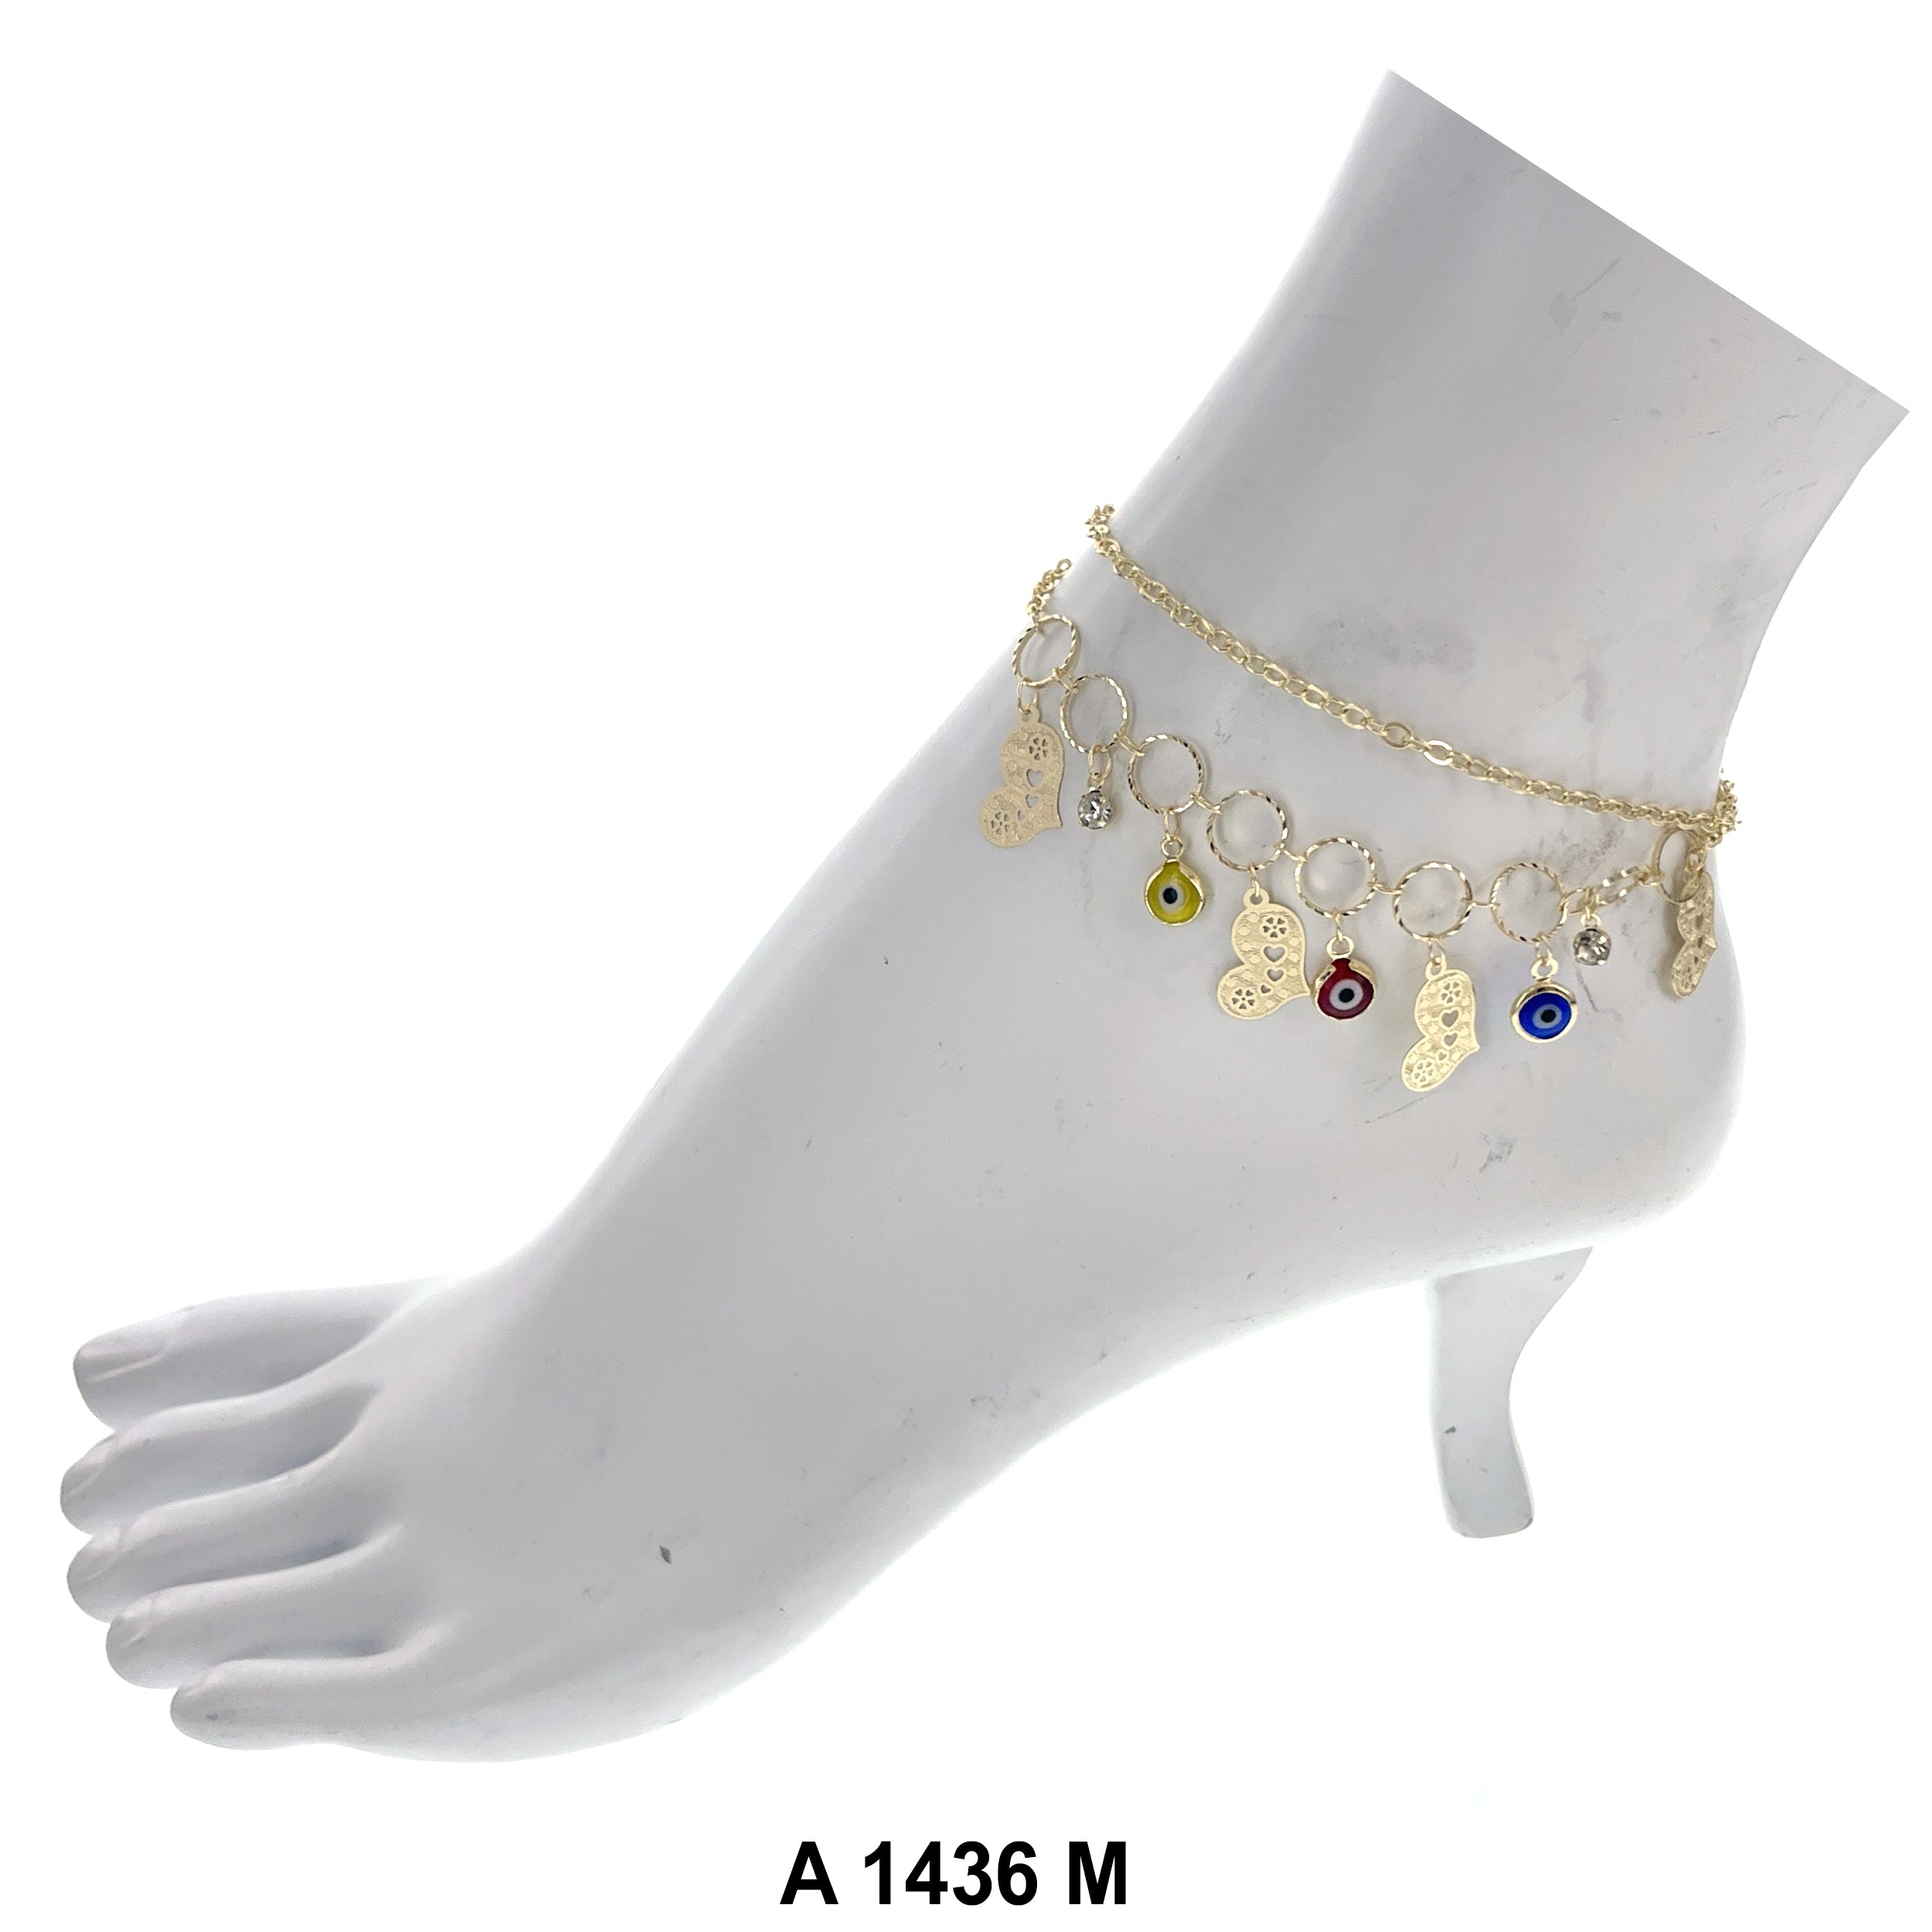 Fashion Anklets A 1436 M